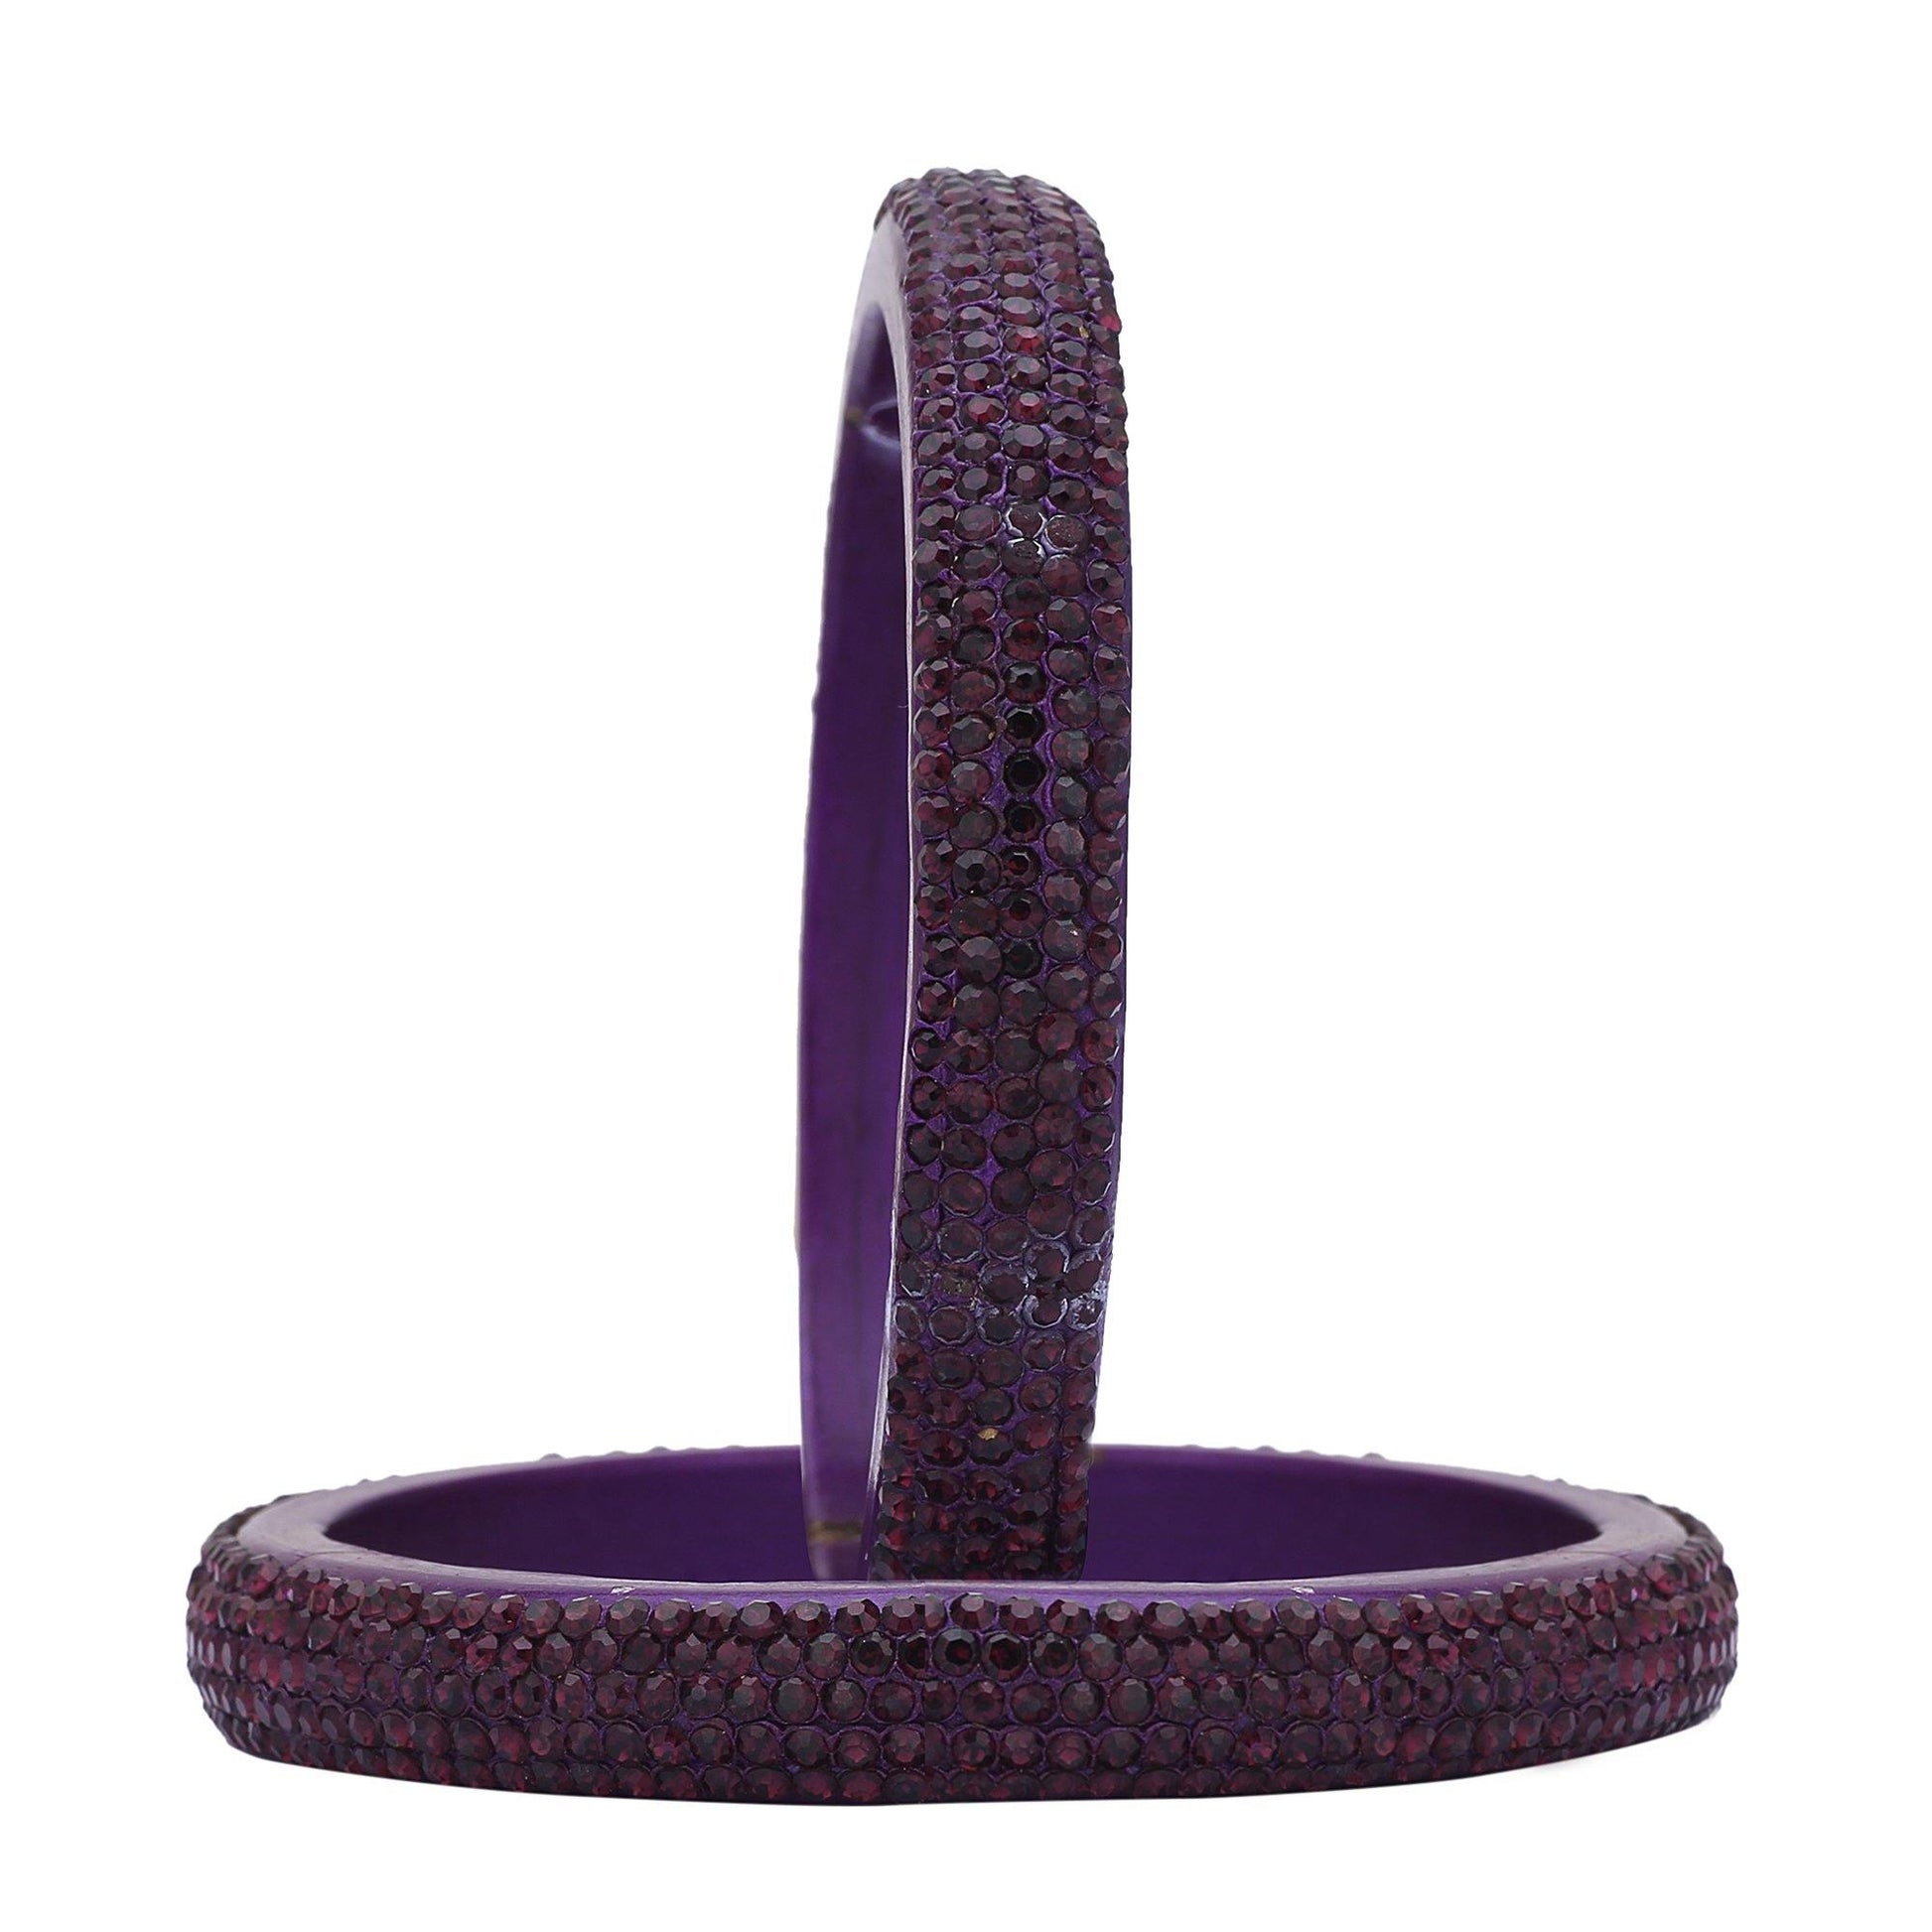 sukriti bridal rajasthani purple lac bangles for women - set of 2